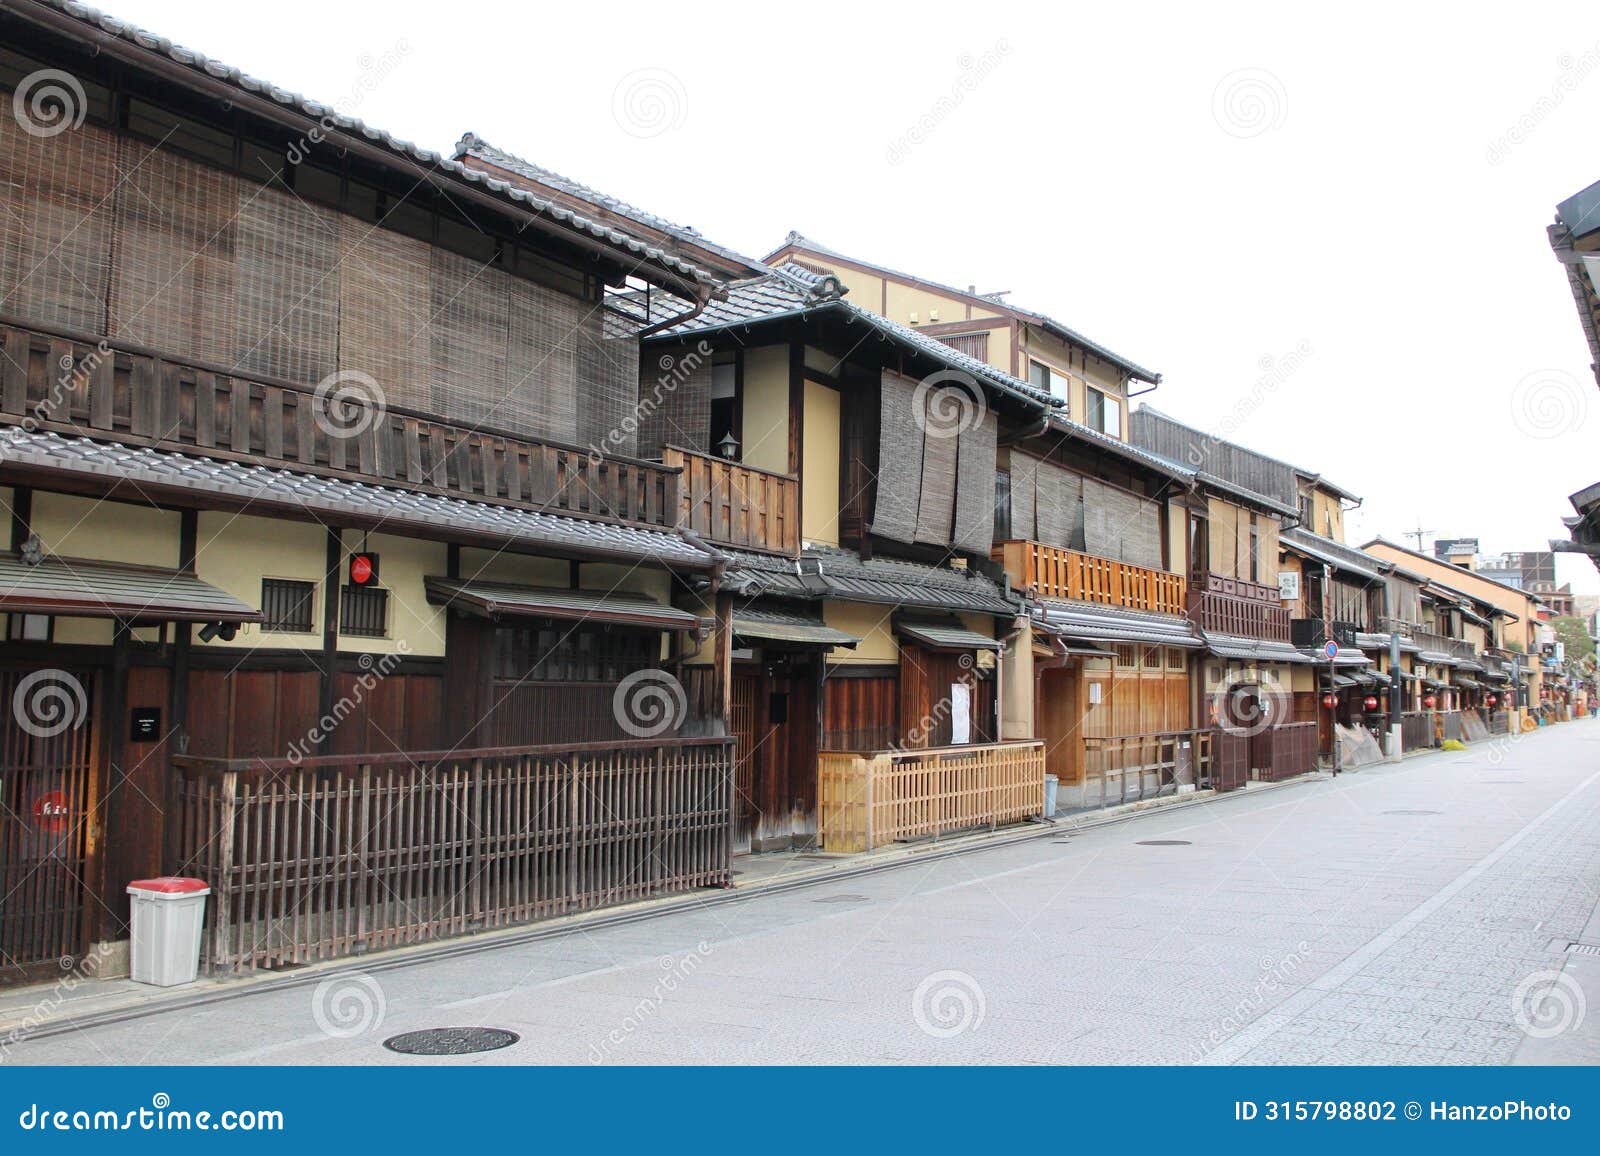 old town along hanami-koji street in kyoto, japan